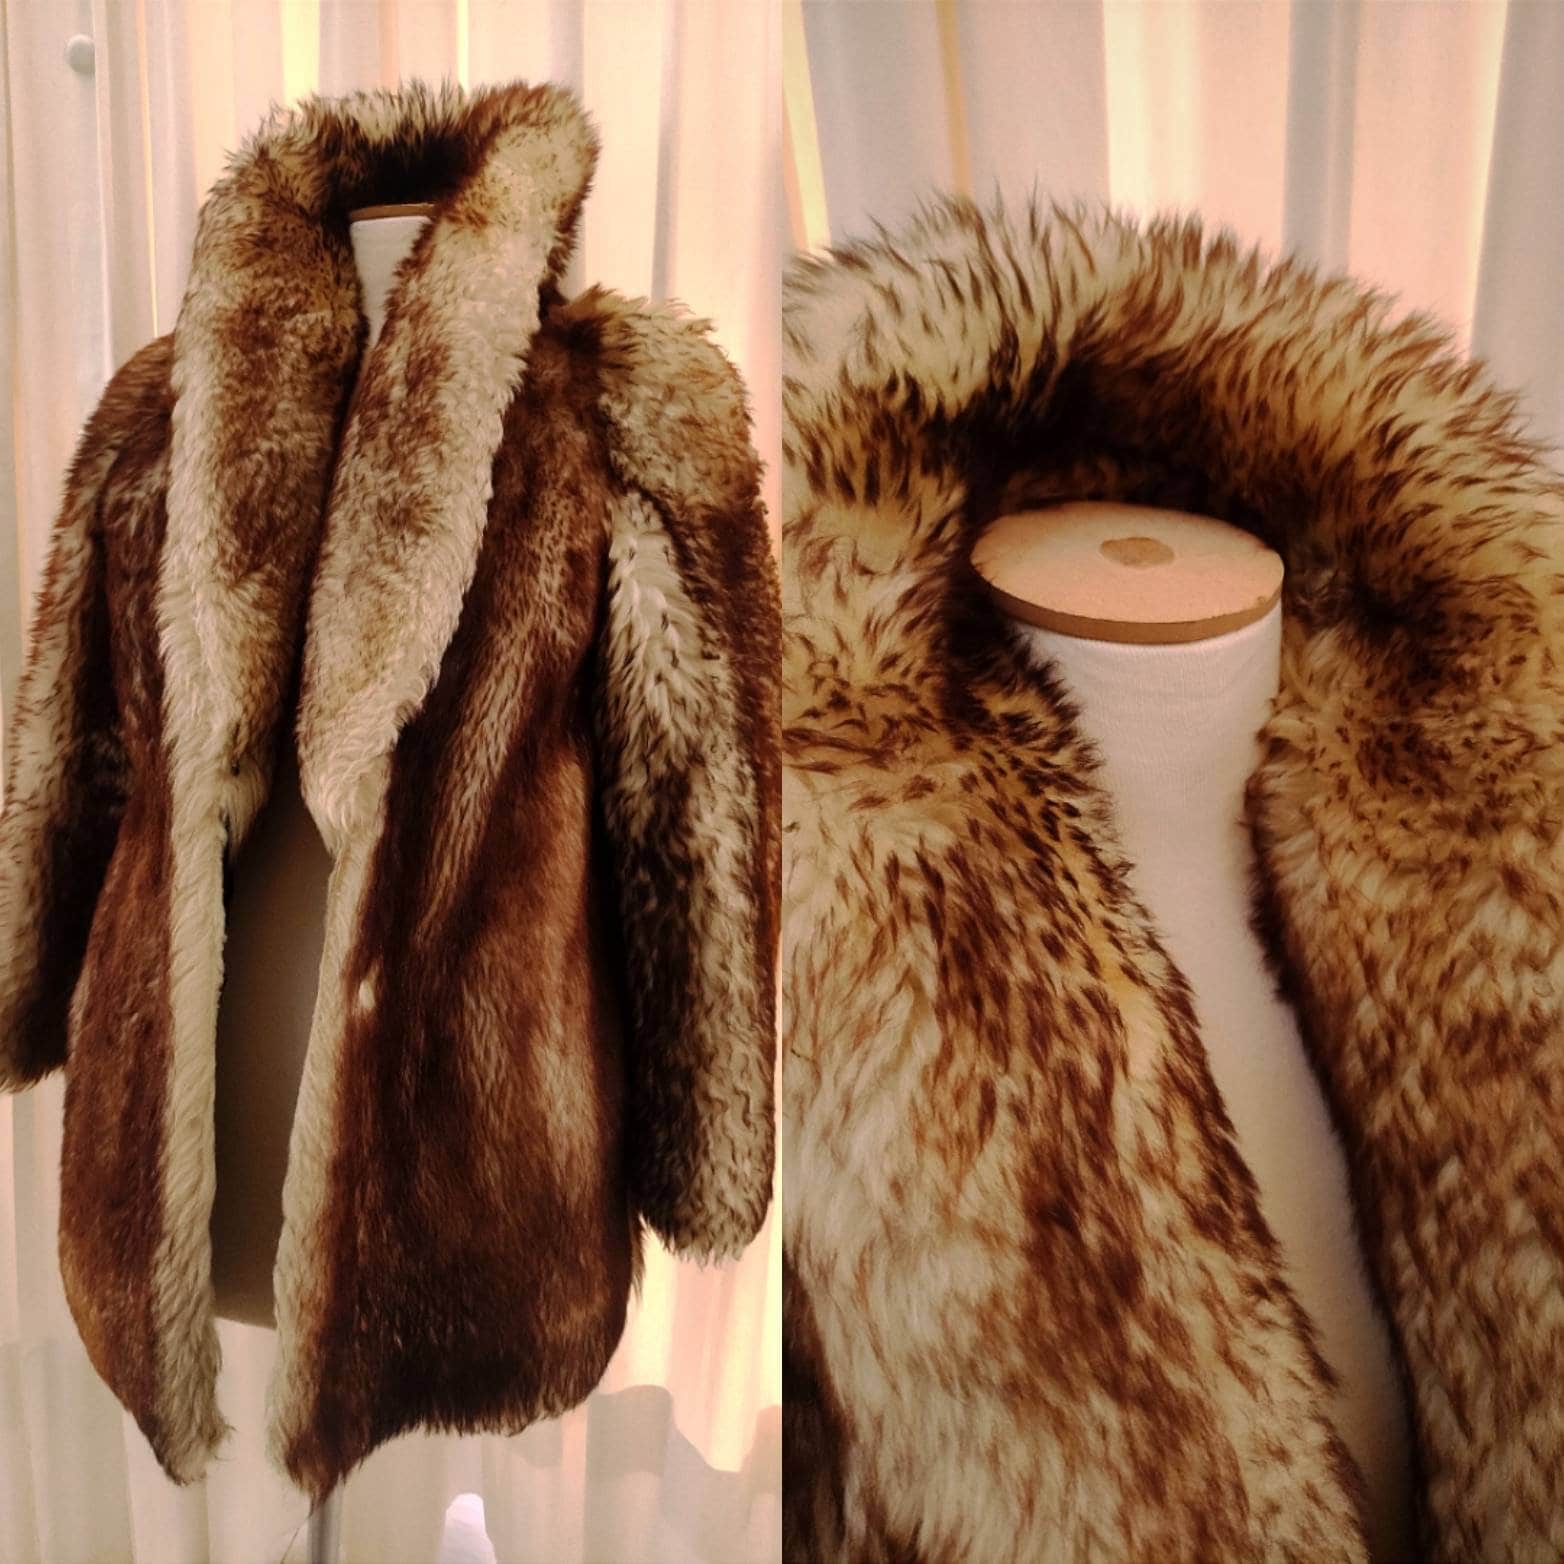 vintage eco fur coat